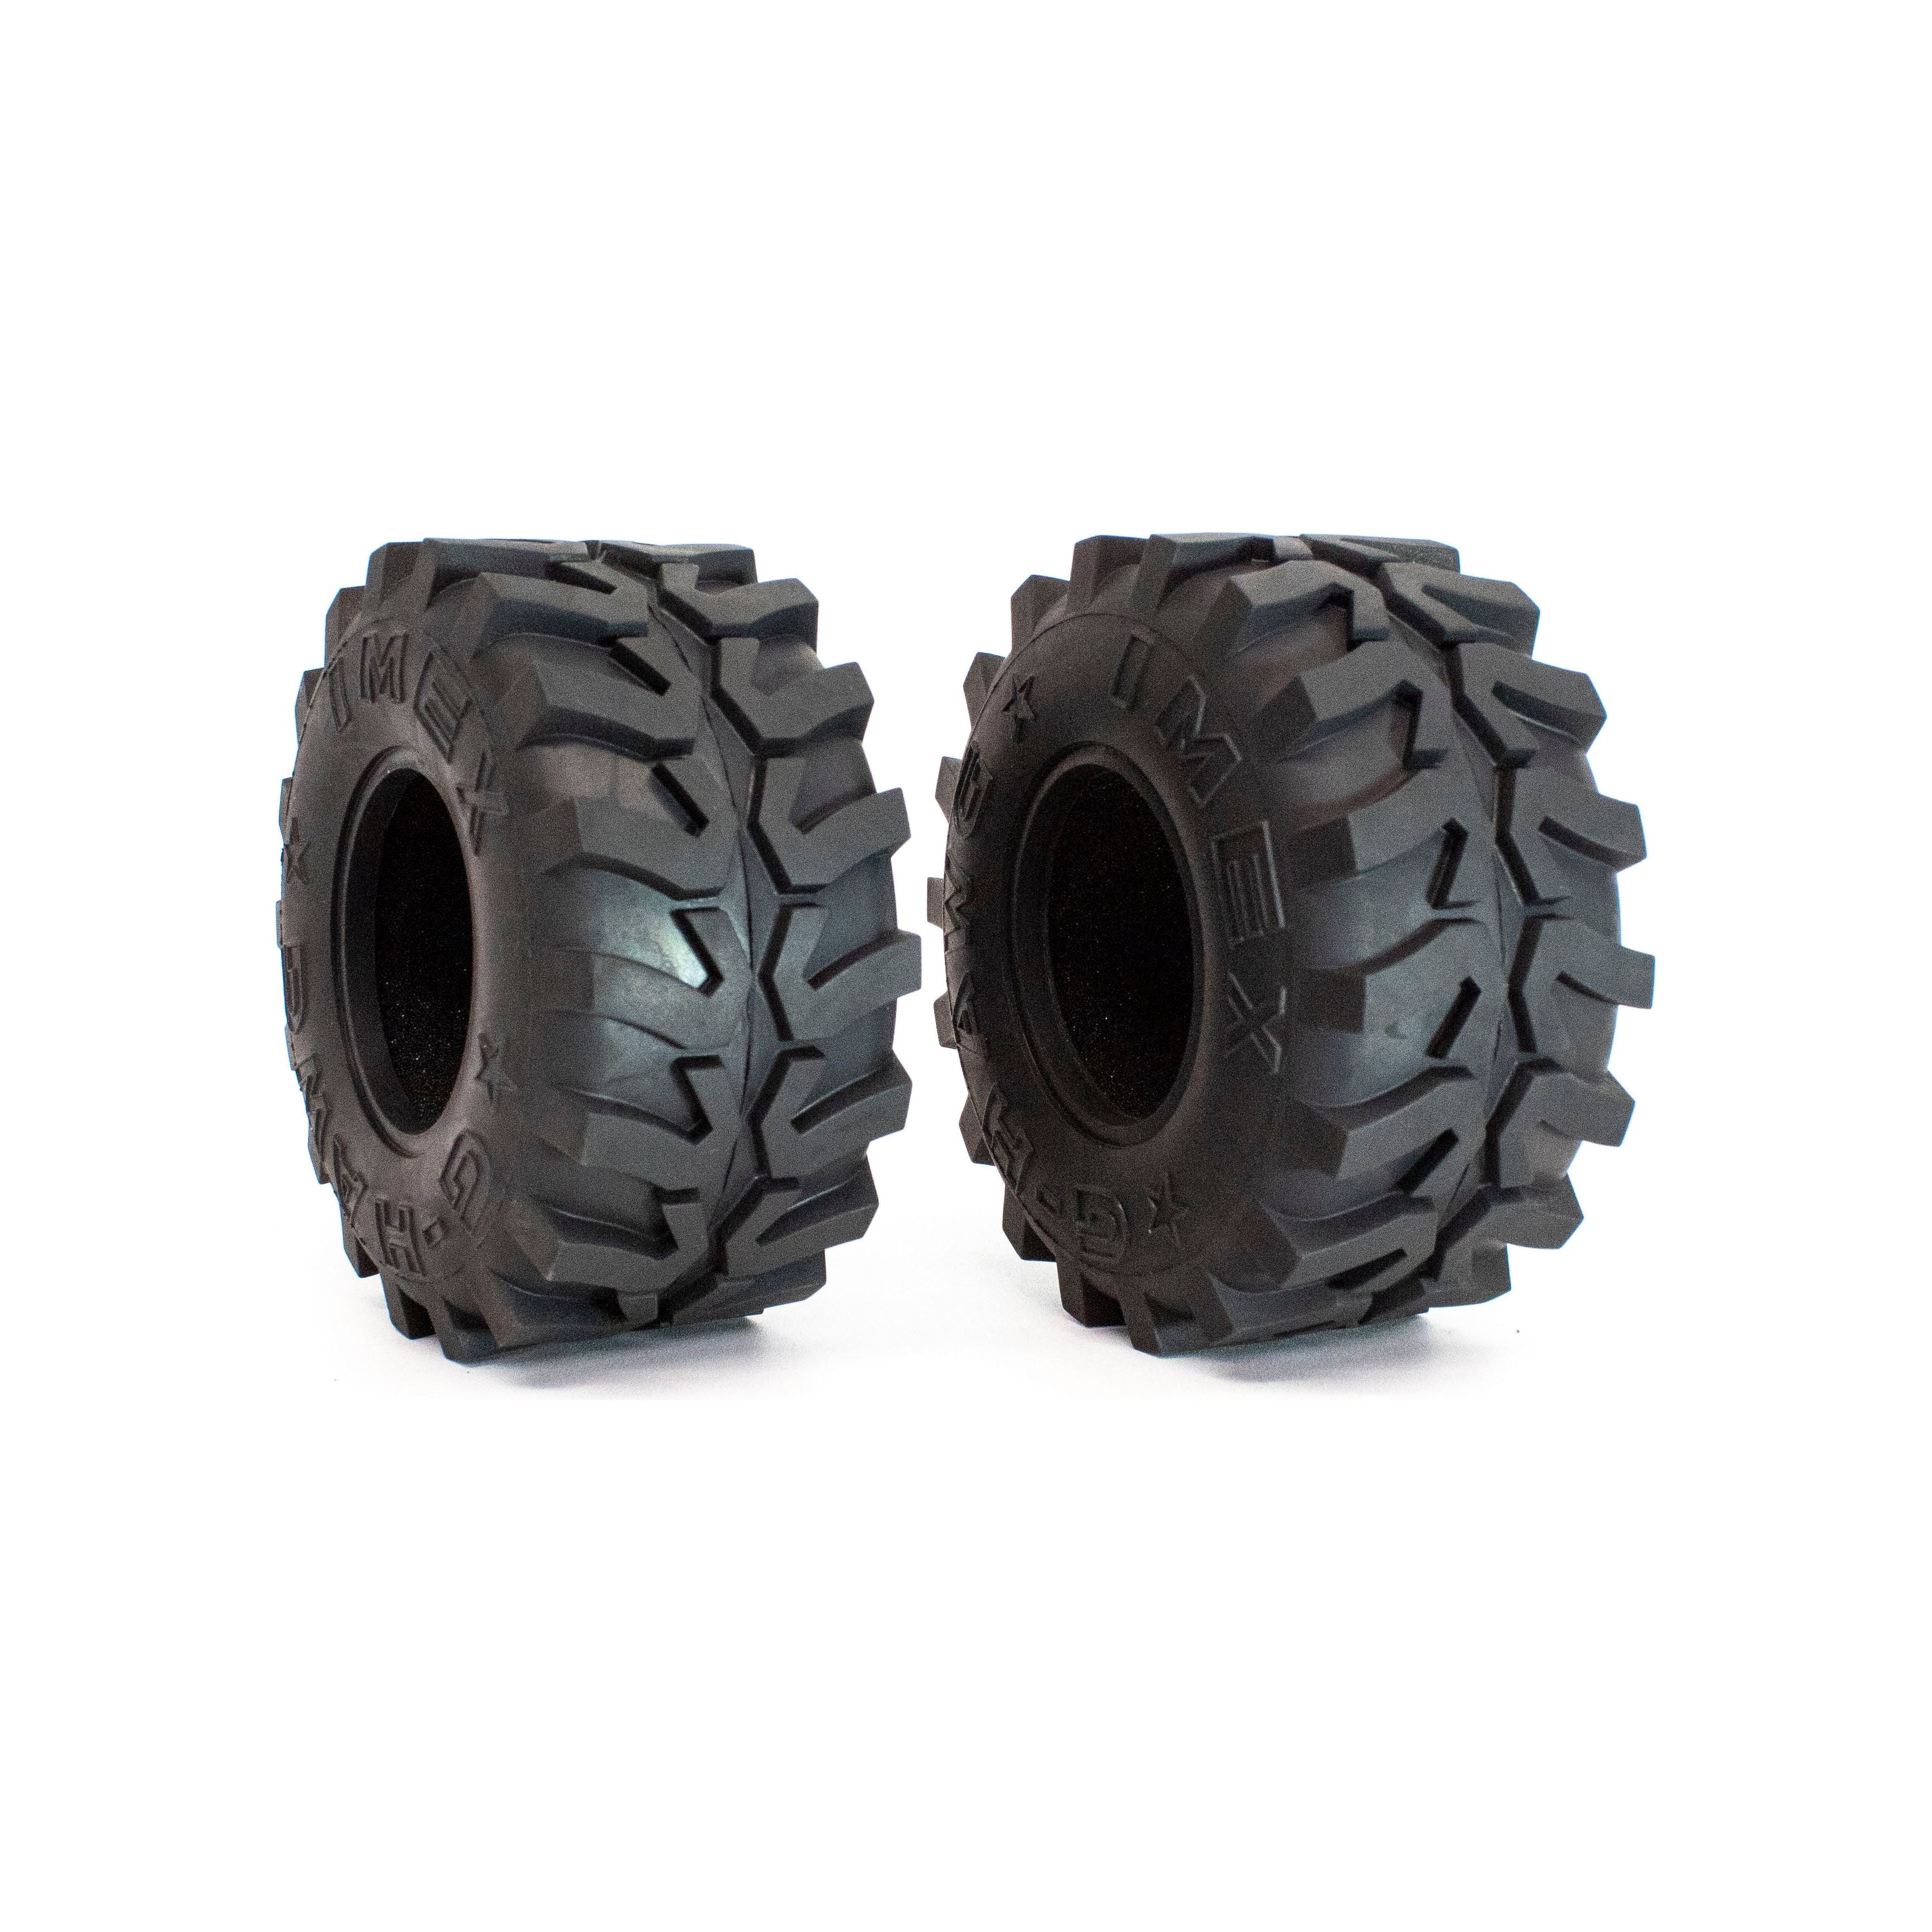 IMEX 2.2 G-Hawg Tires (1 Pair)